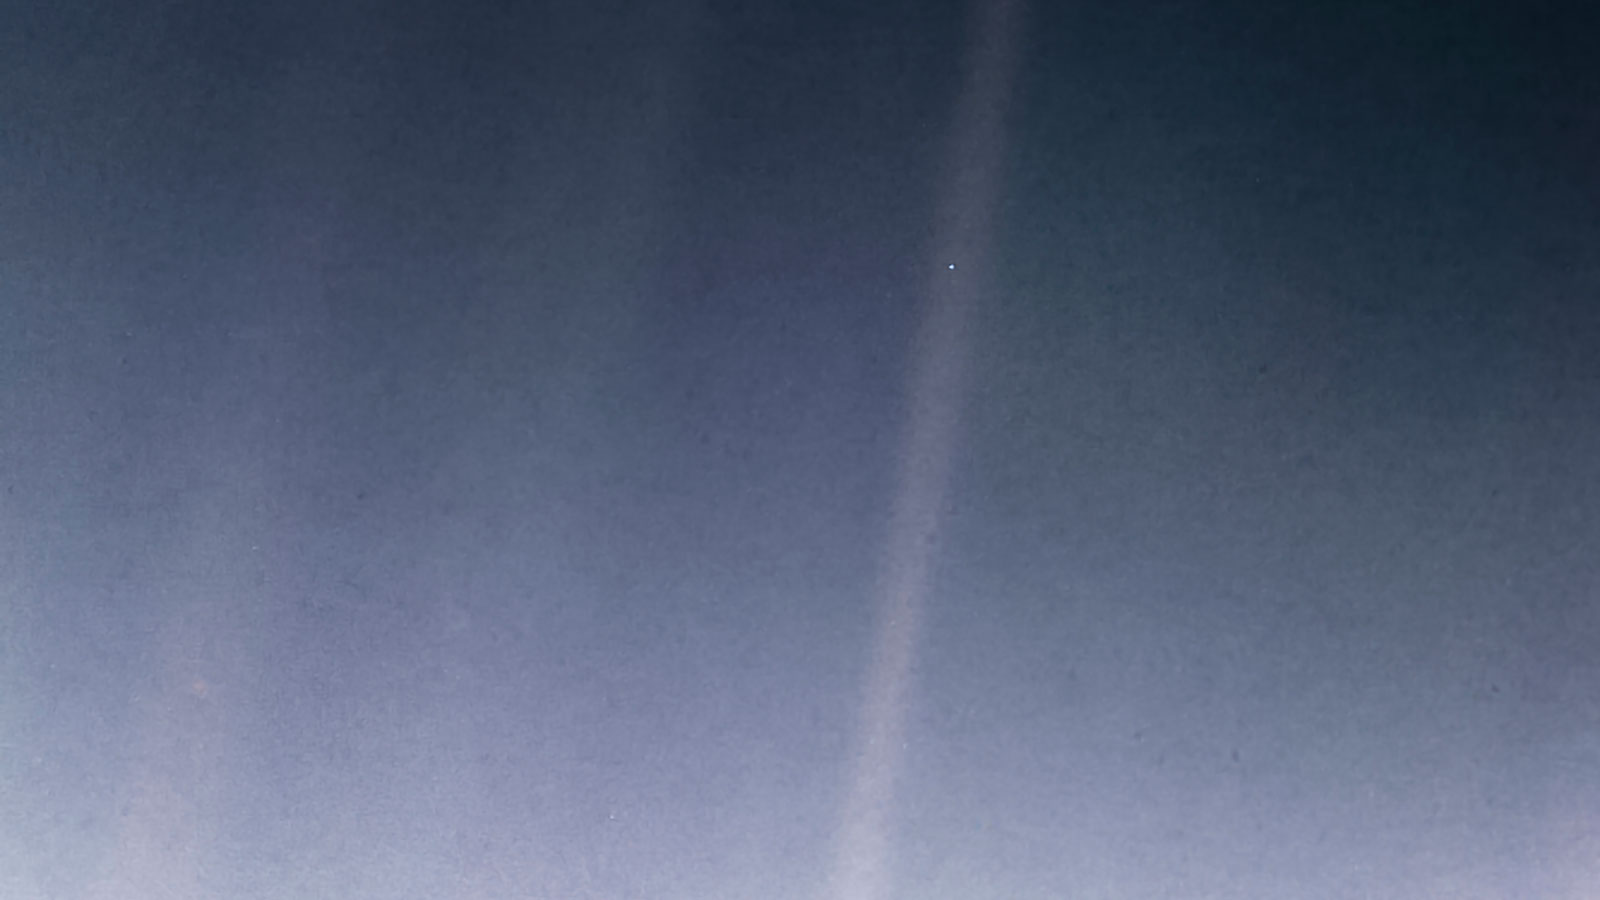 Voyager 1's Pale Blue Dot